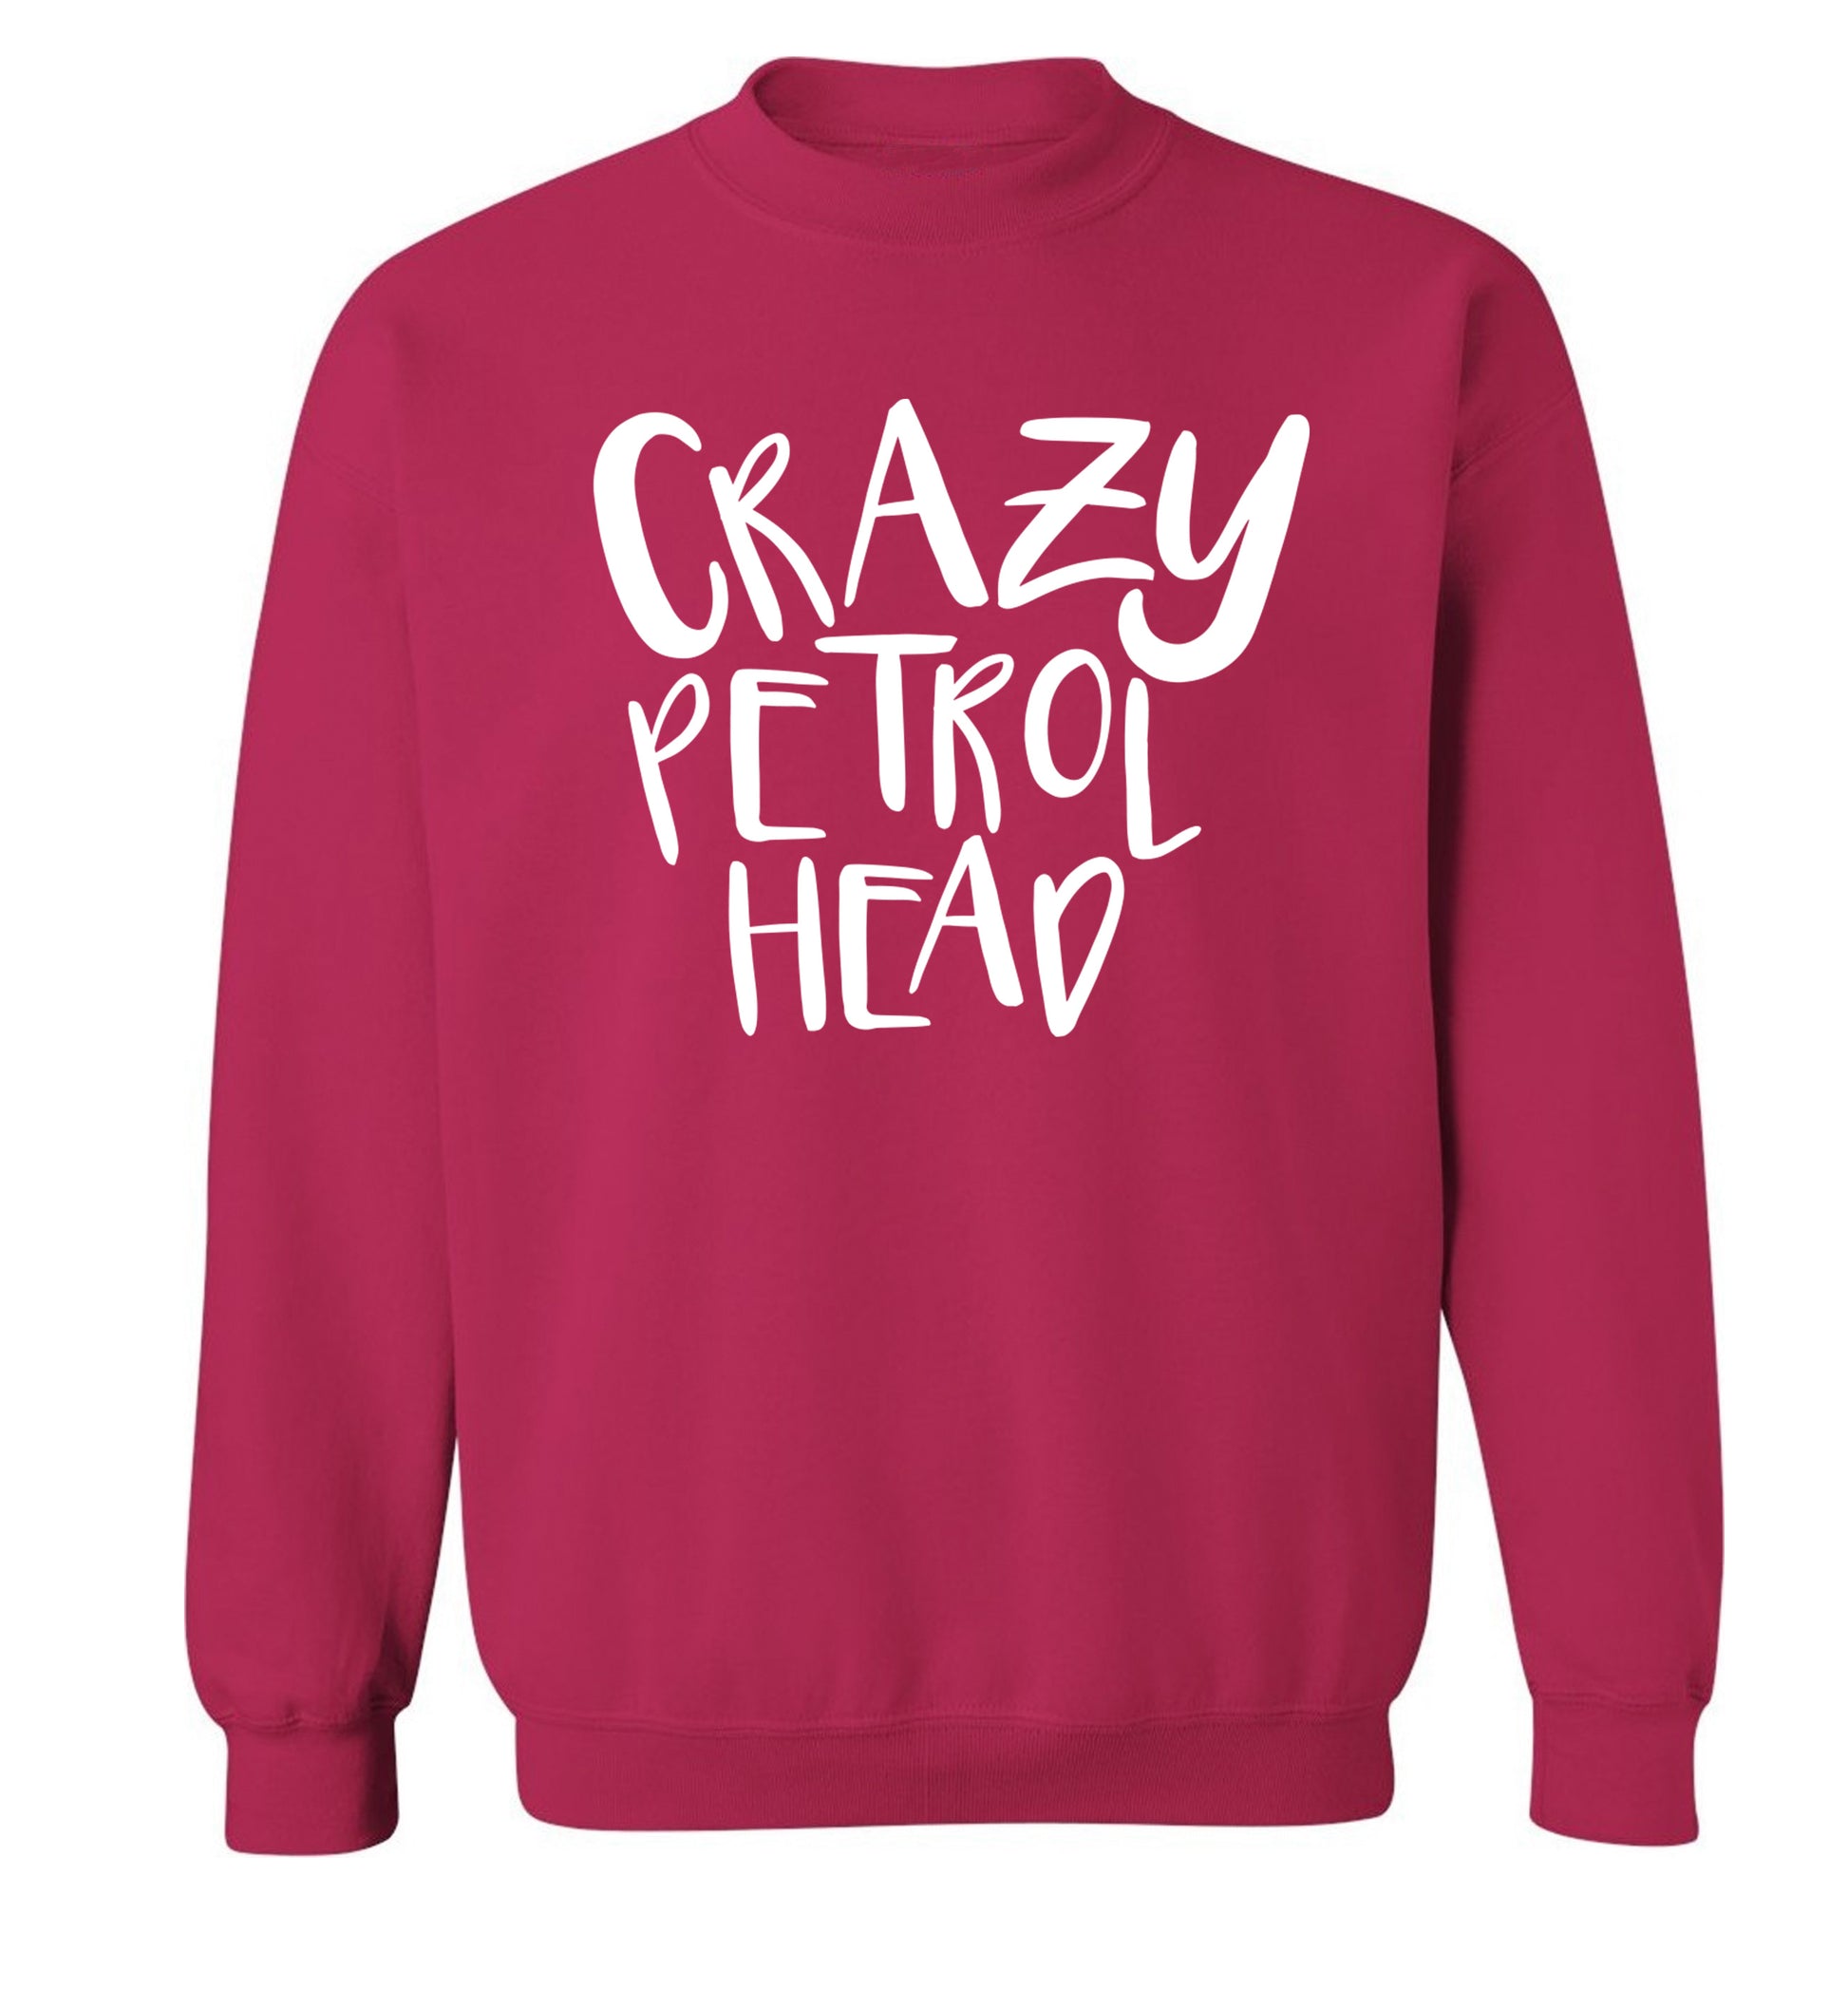 Crazy petrol head Adult's unisex pink Sweater 2XL